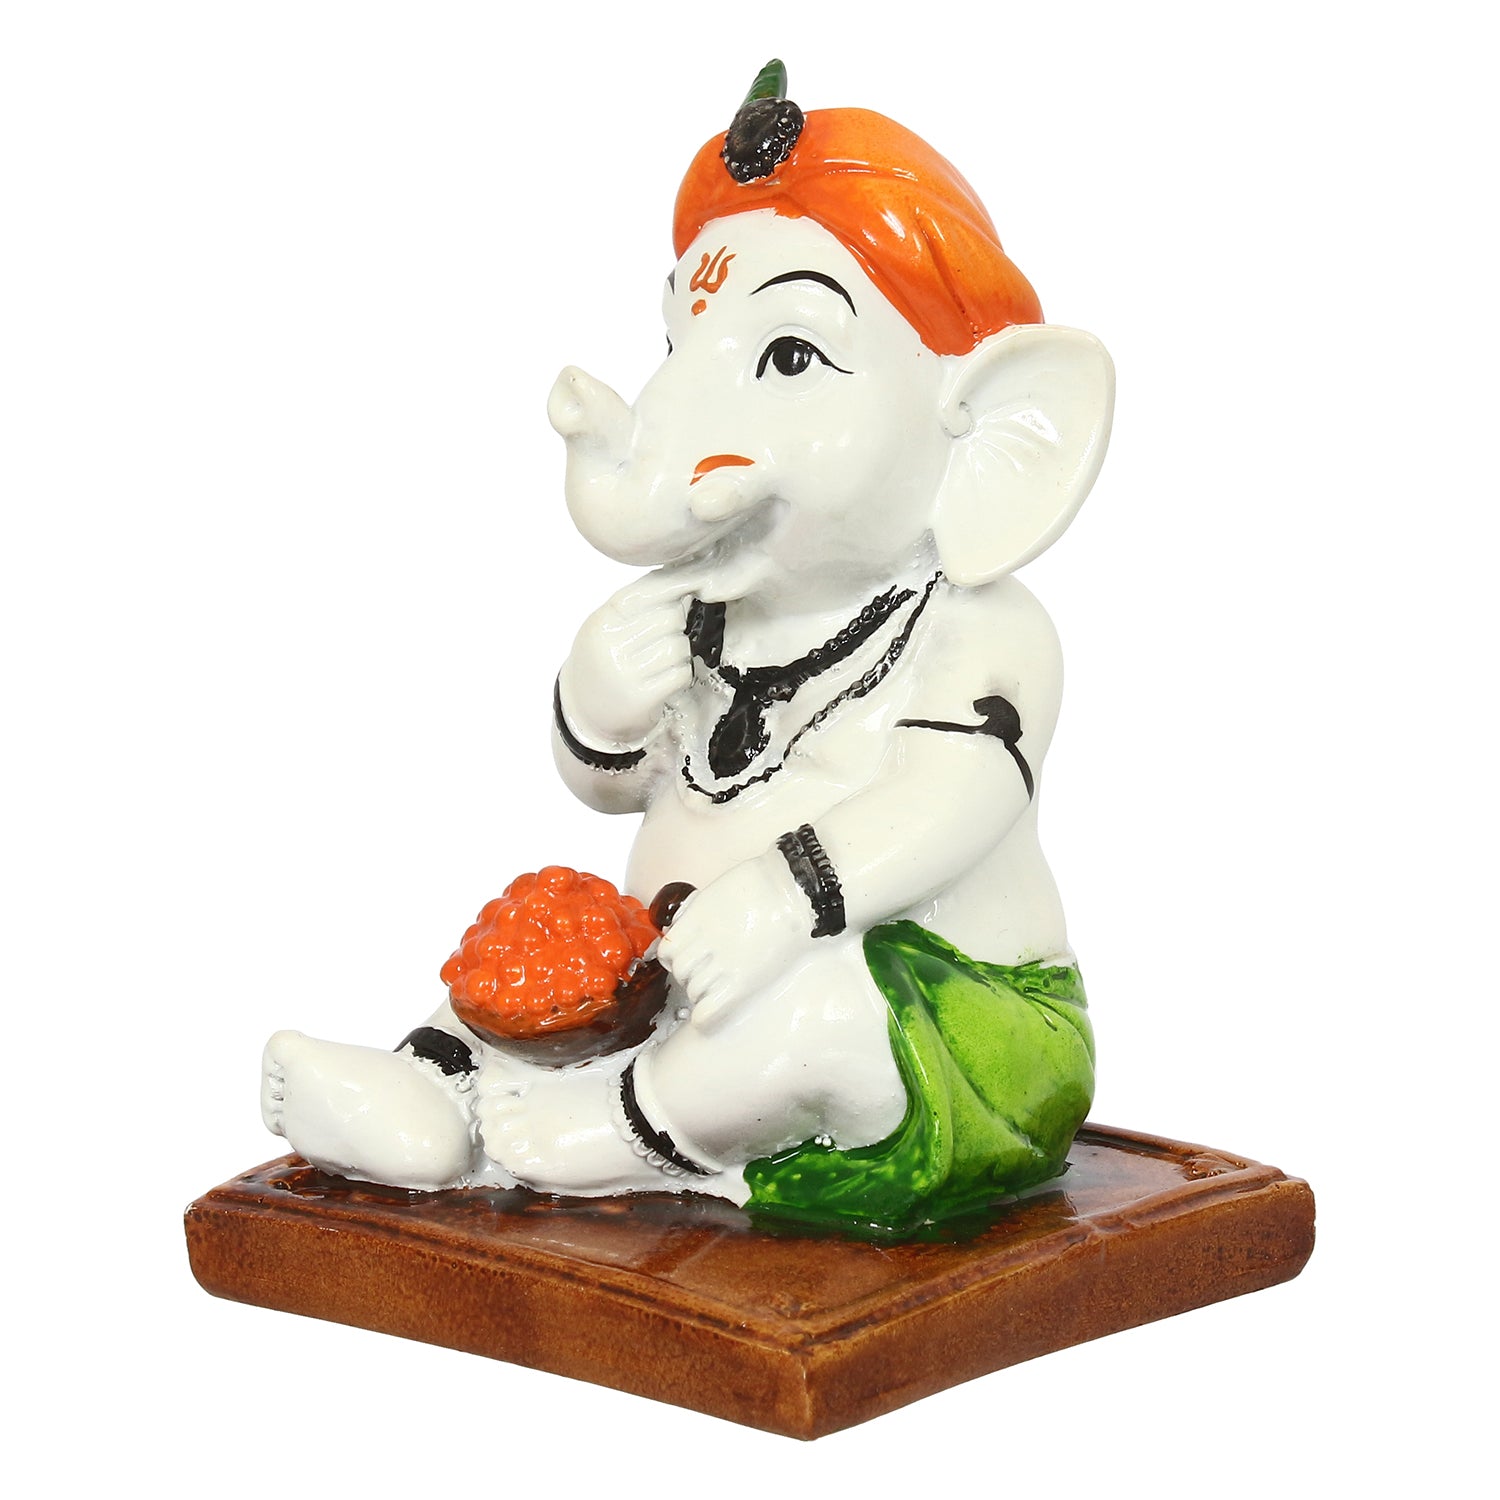 Decorative Polyresin Lord Ganesha Idol eating Ladoo in Lord Krishna Avatar (White, Orange, Green) 5